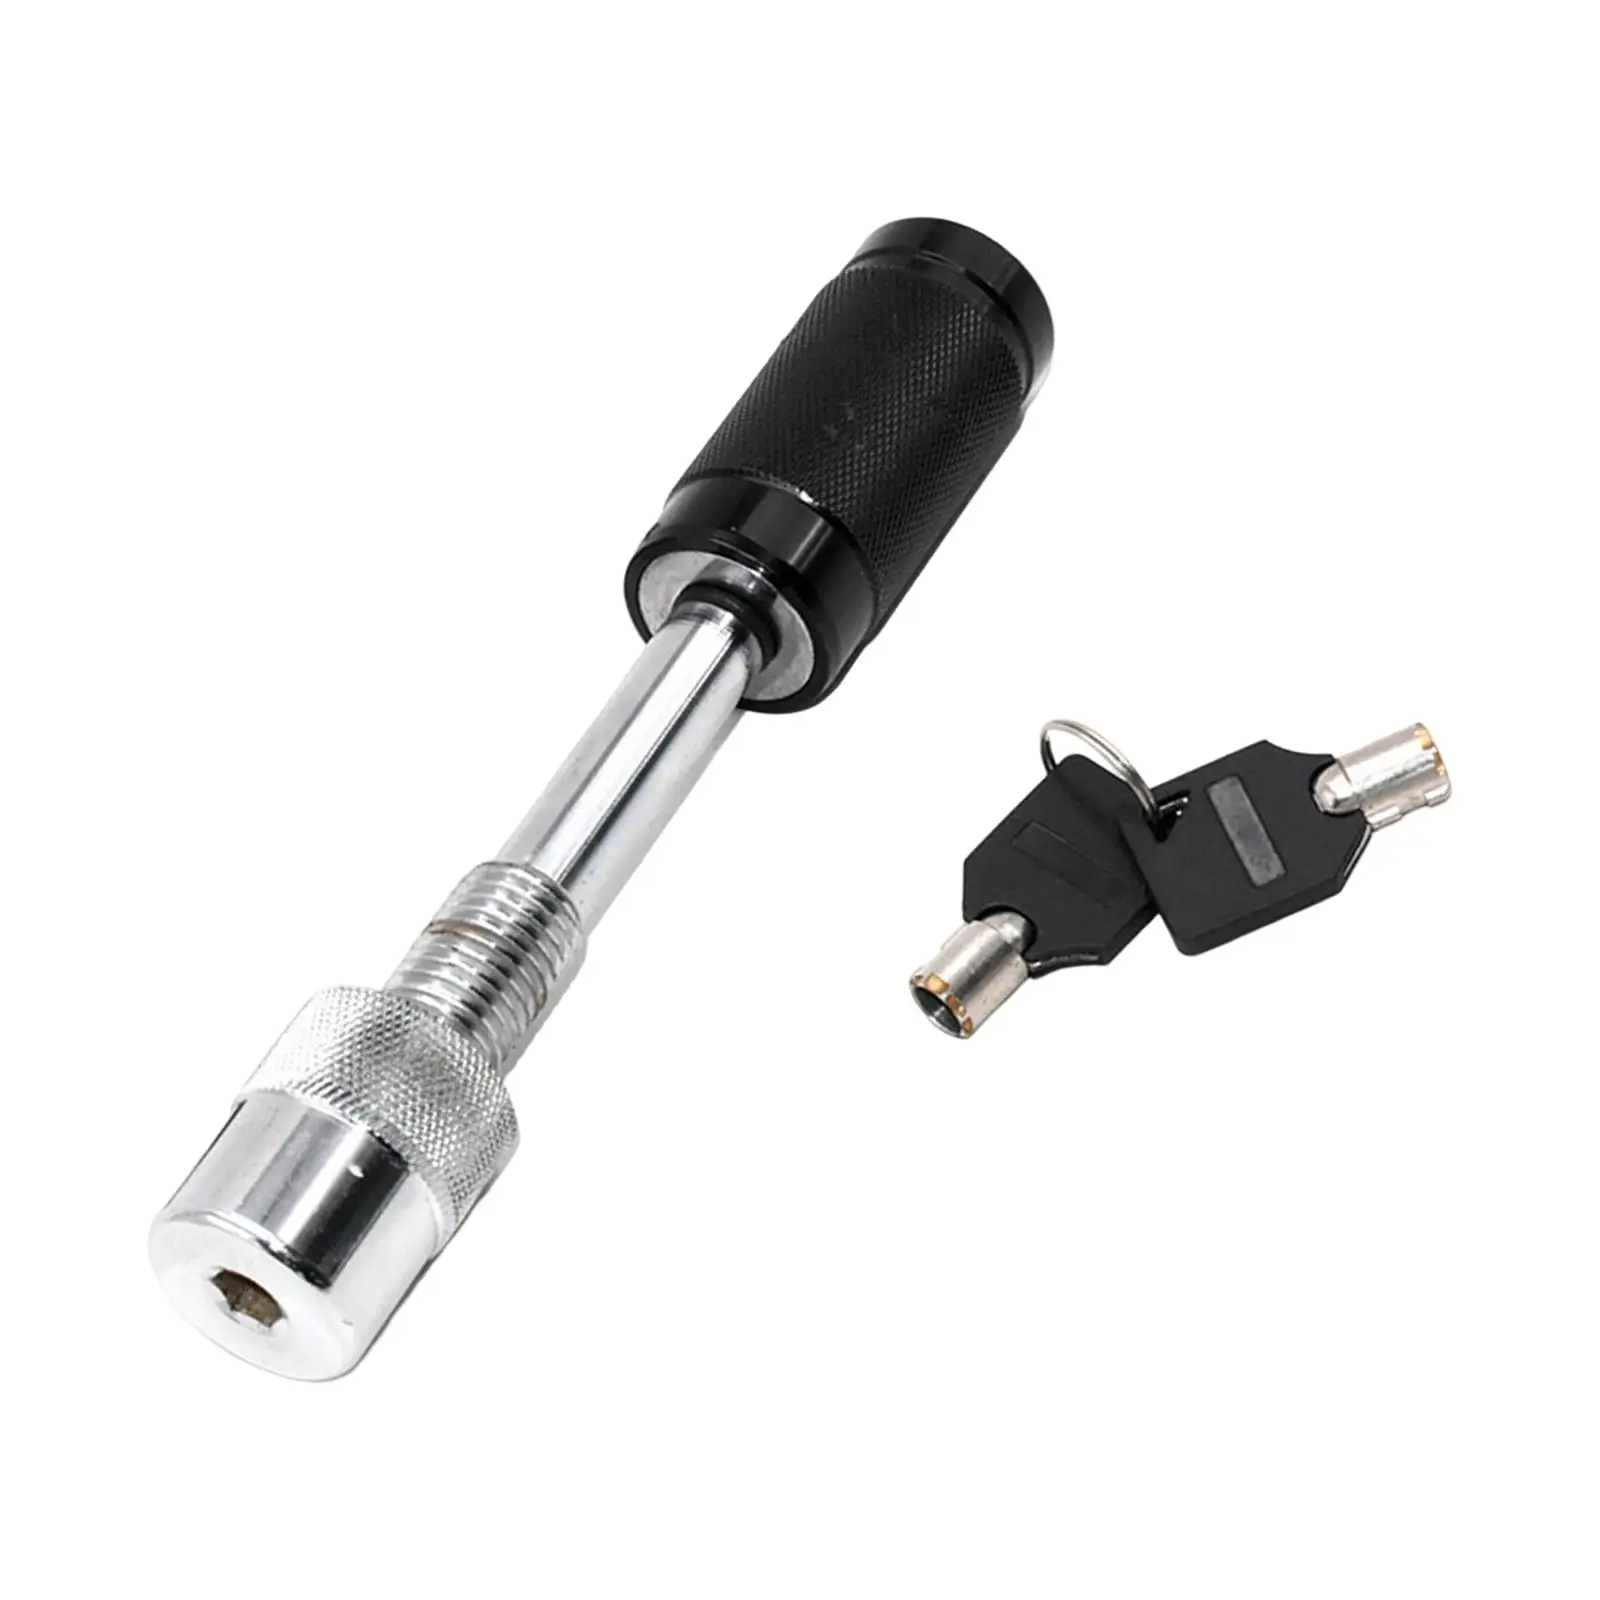 5/8 inch Trailer Hitch Lock Automotive Accessories Locking Device Receiver